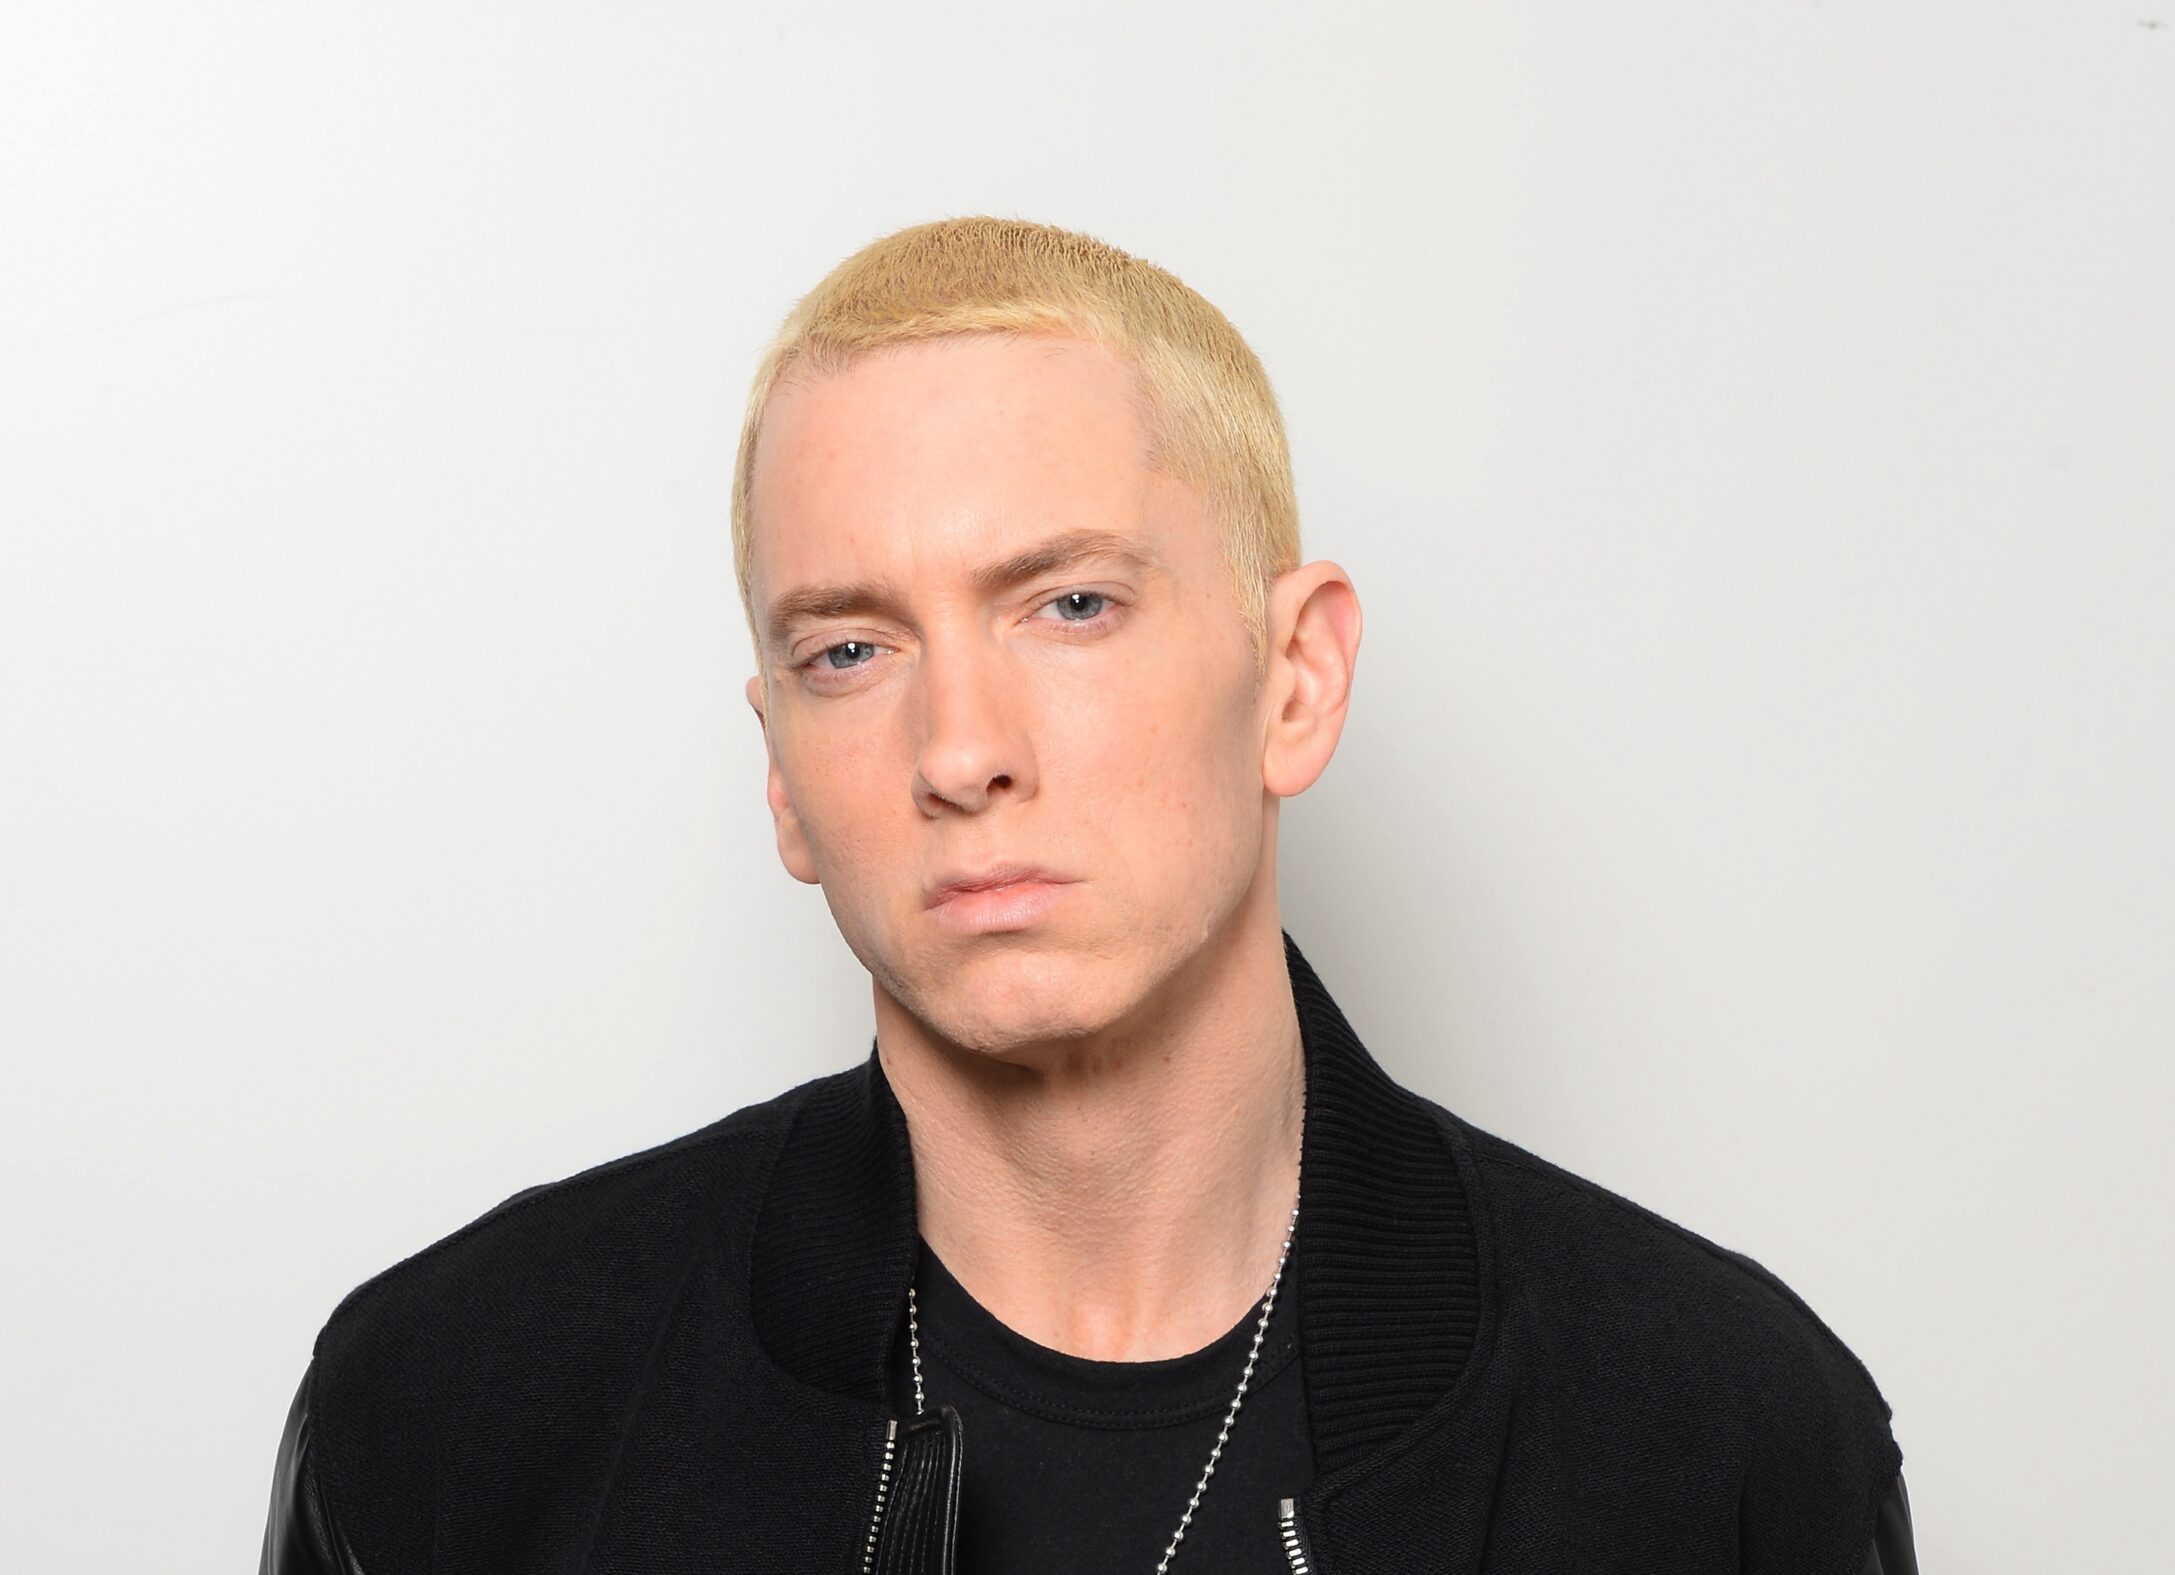 Benzino Posts Montage Of Eminem Using The N-Word, Calls Him "Racist"